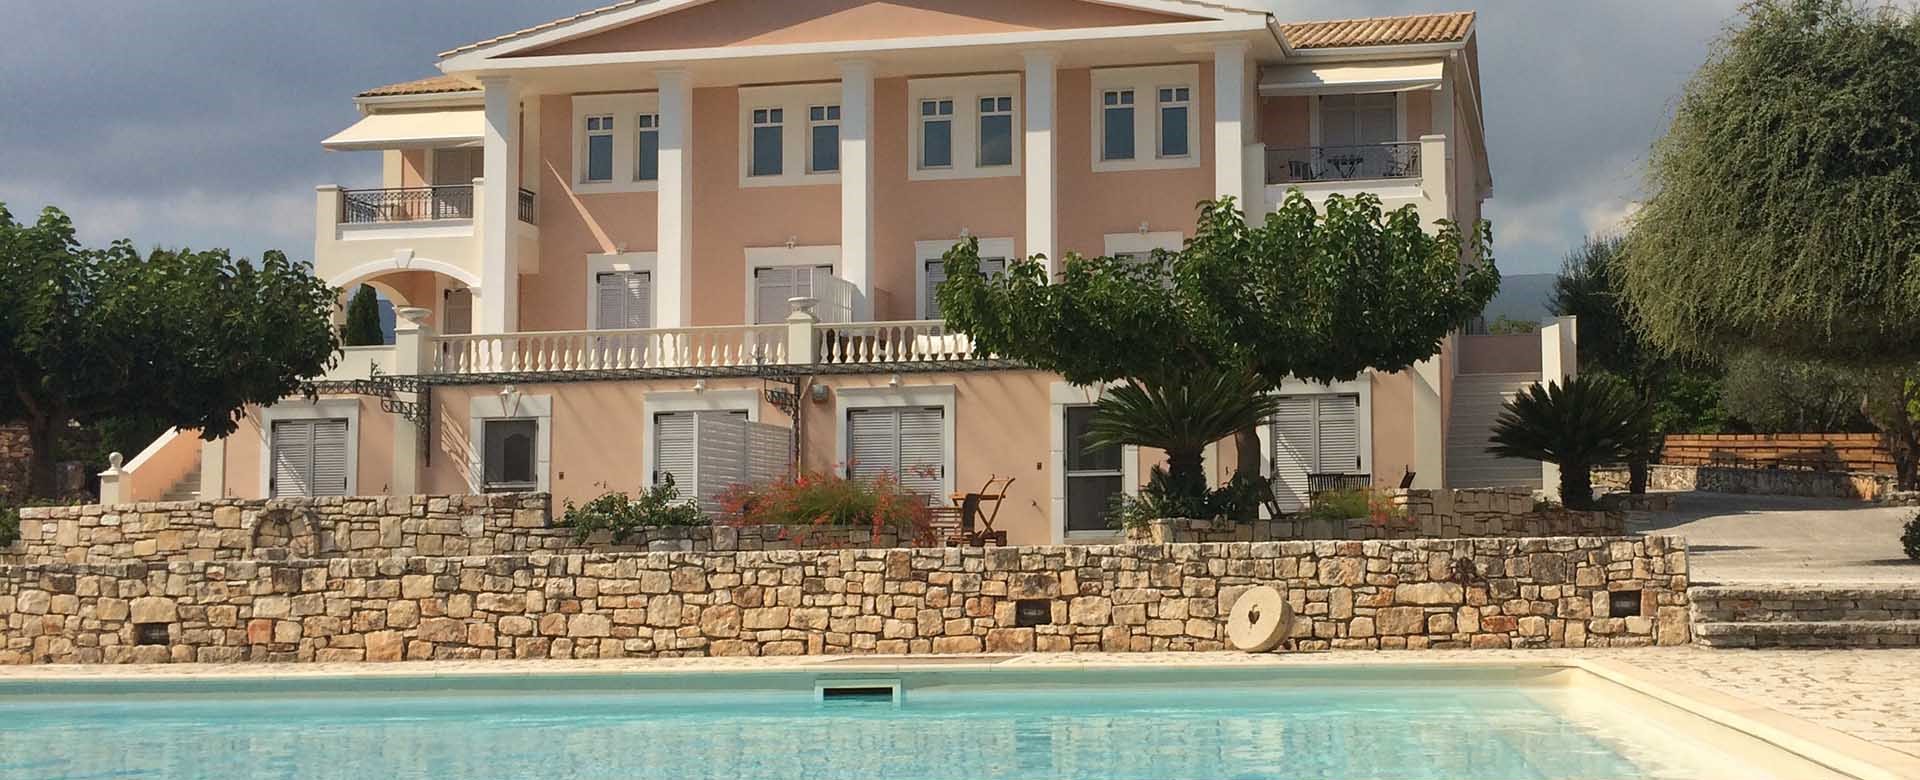 The pool and impressive Melissani Apartments in Karavomilos, Kefalonia, Greek Islands